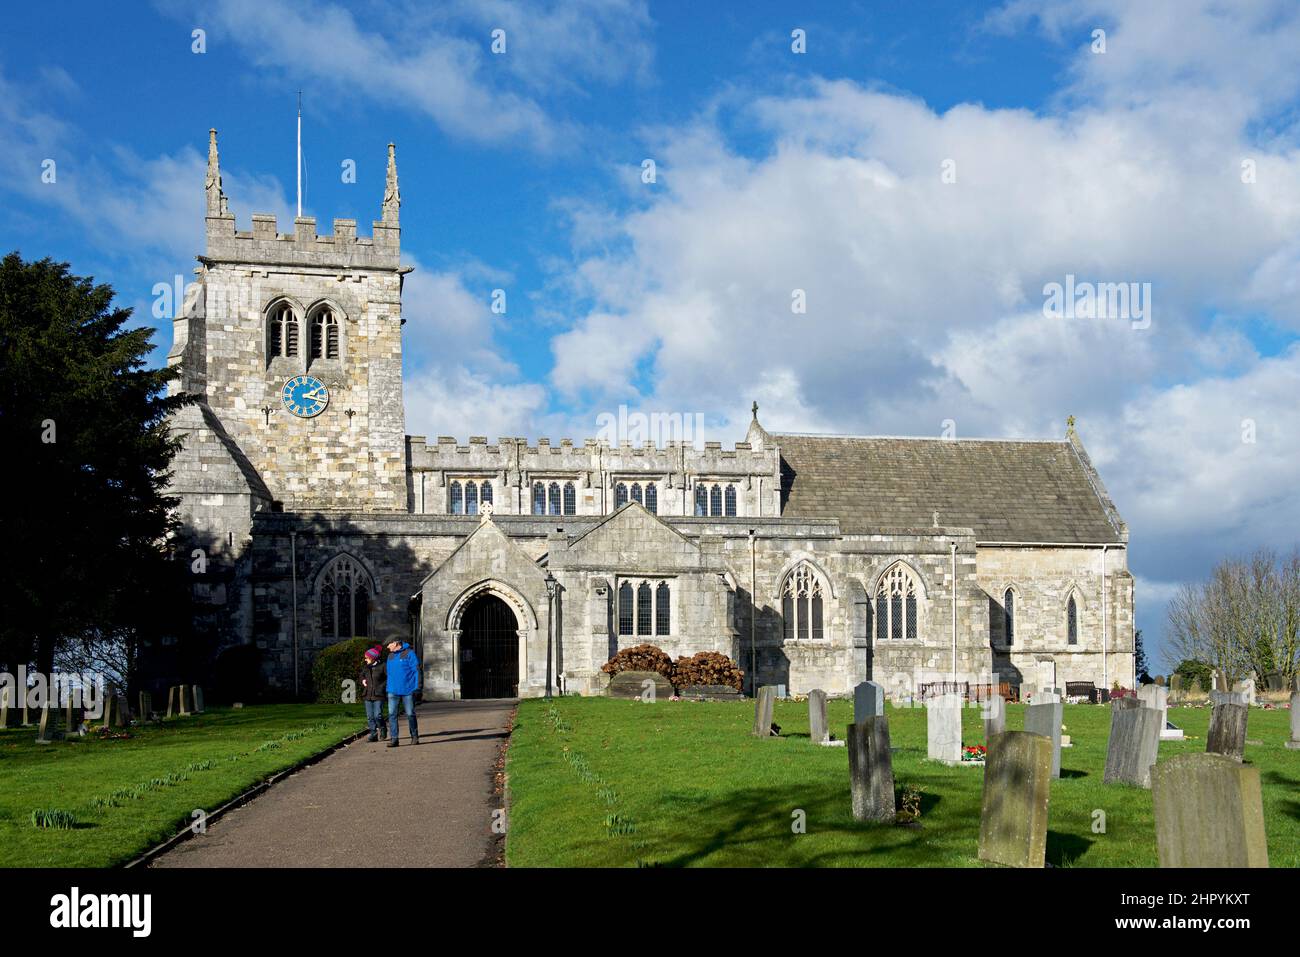 All Saints Church in Sherburn in Elmet, North Yorkshire, England UK Stock Photo